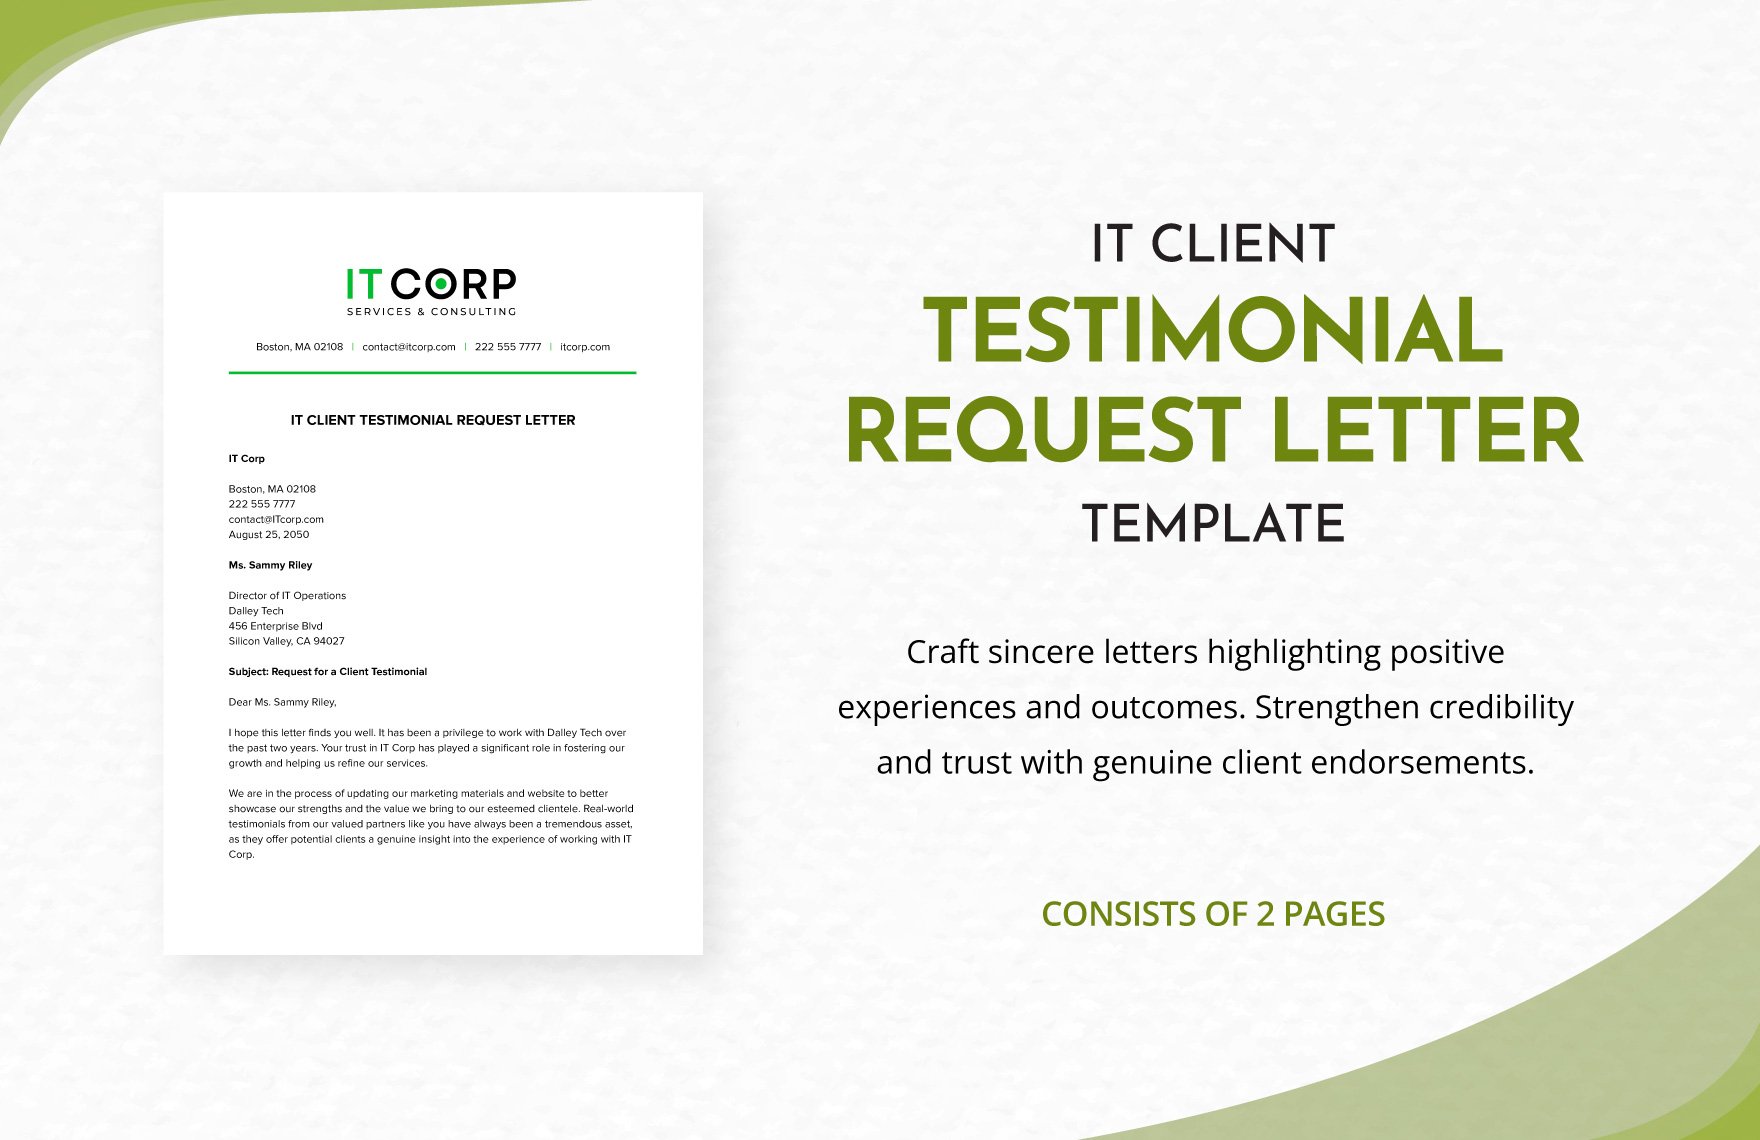 IT Client Testimonial Request Letter Template